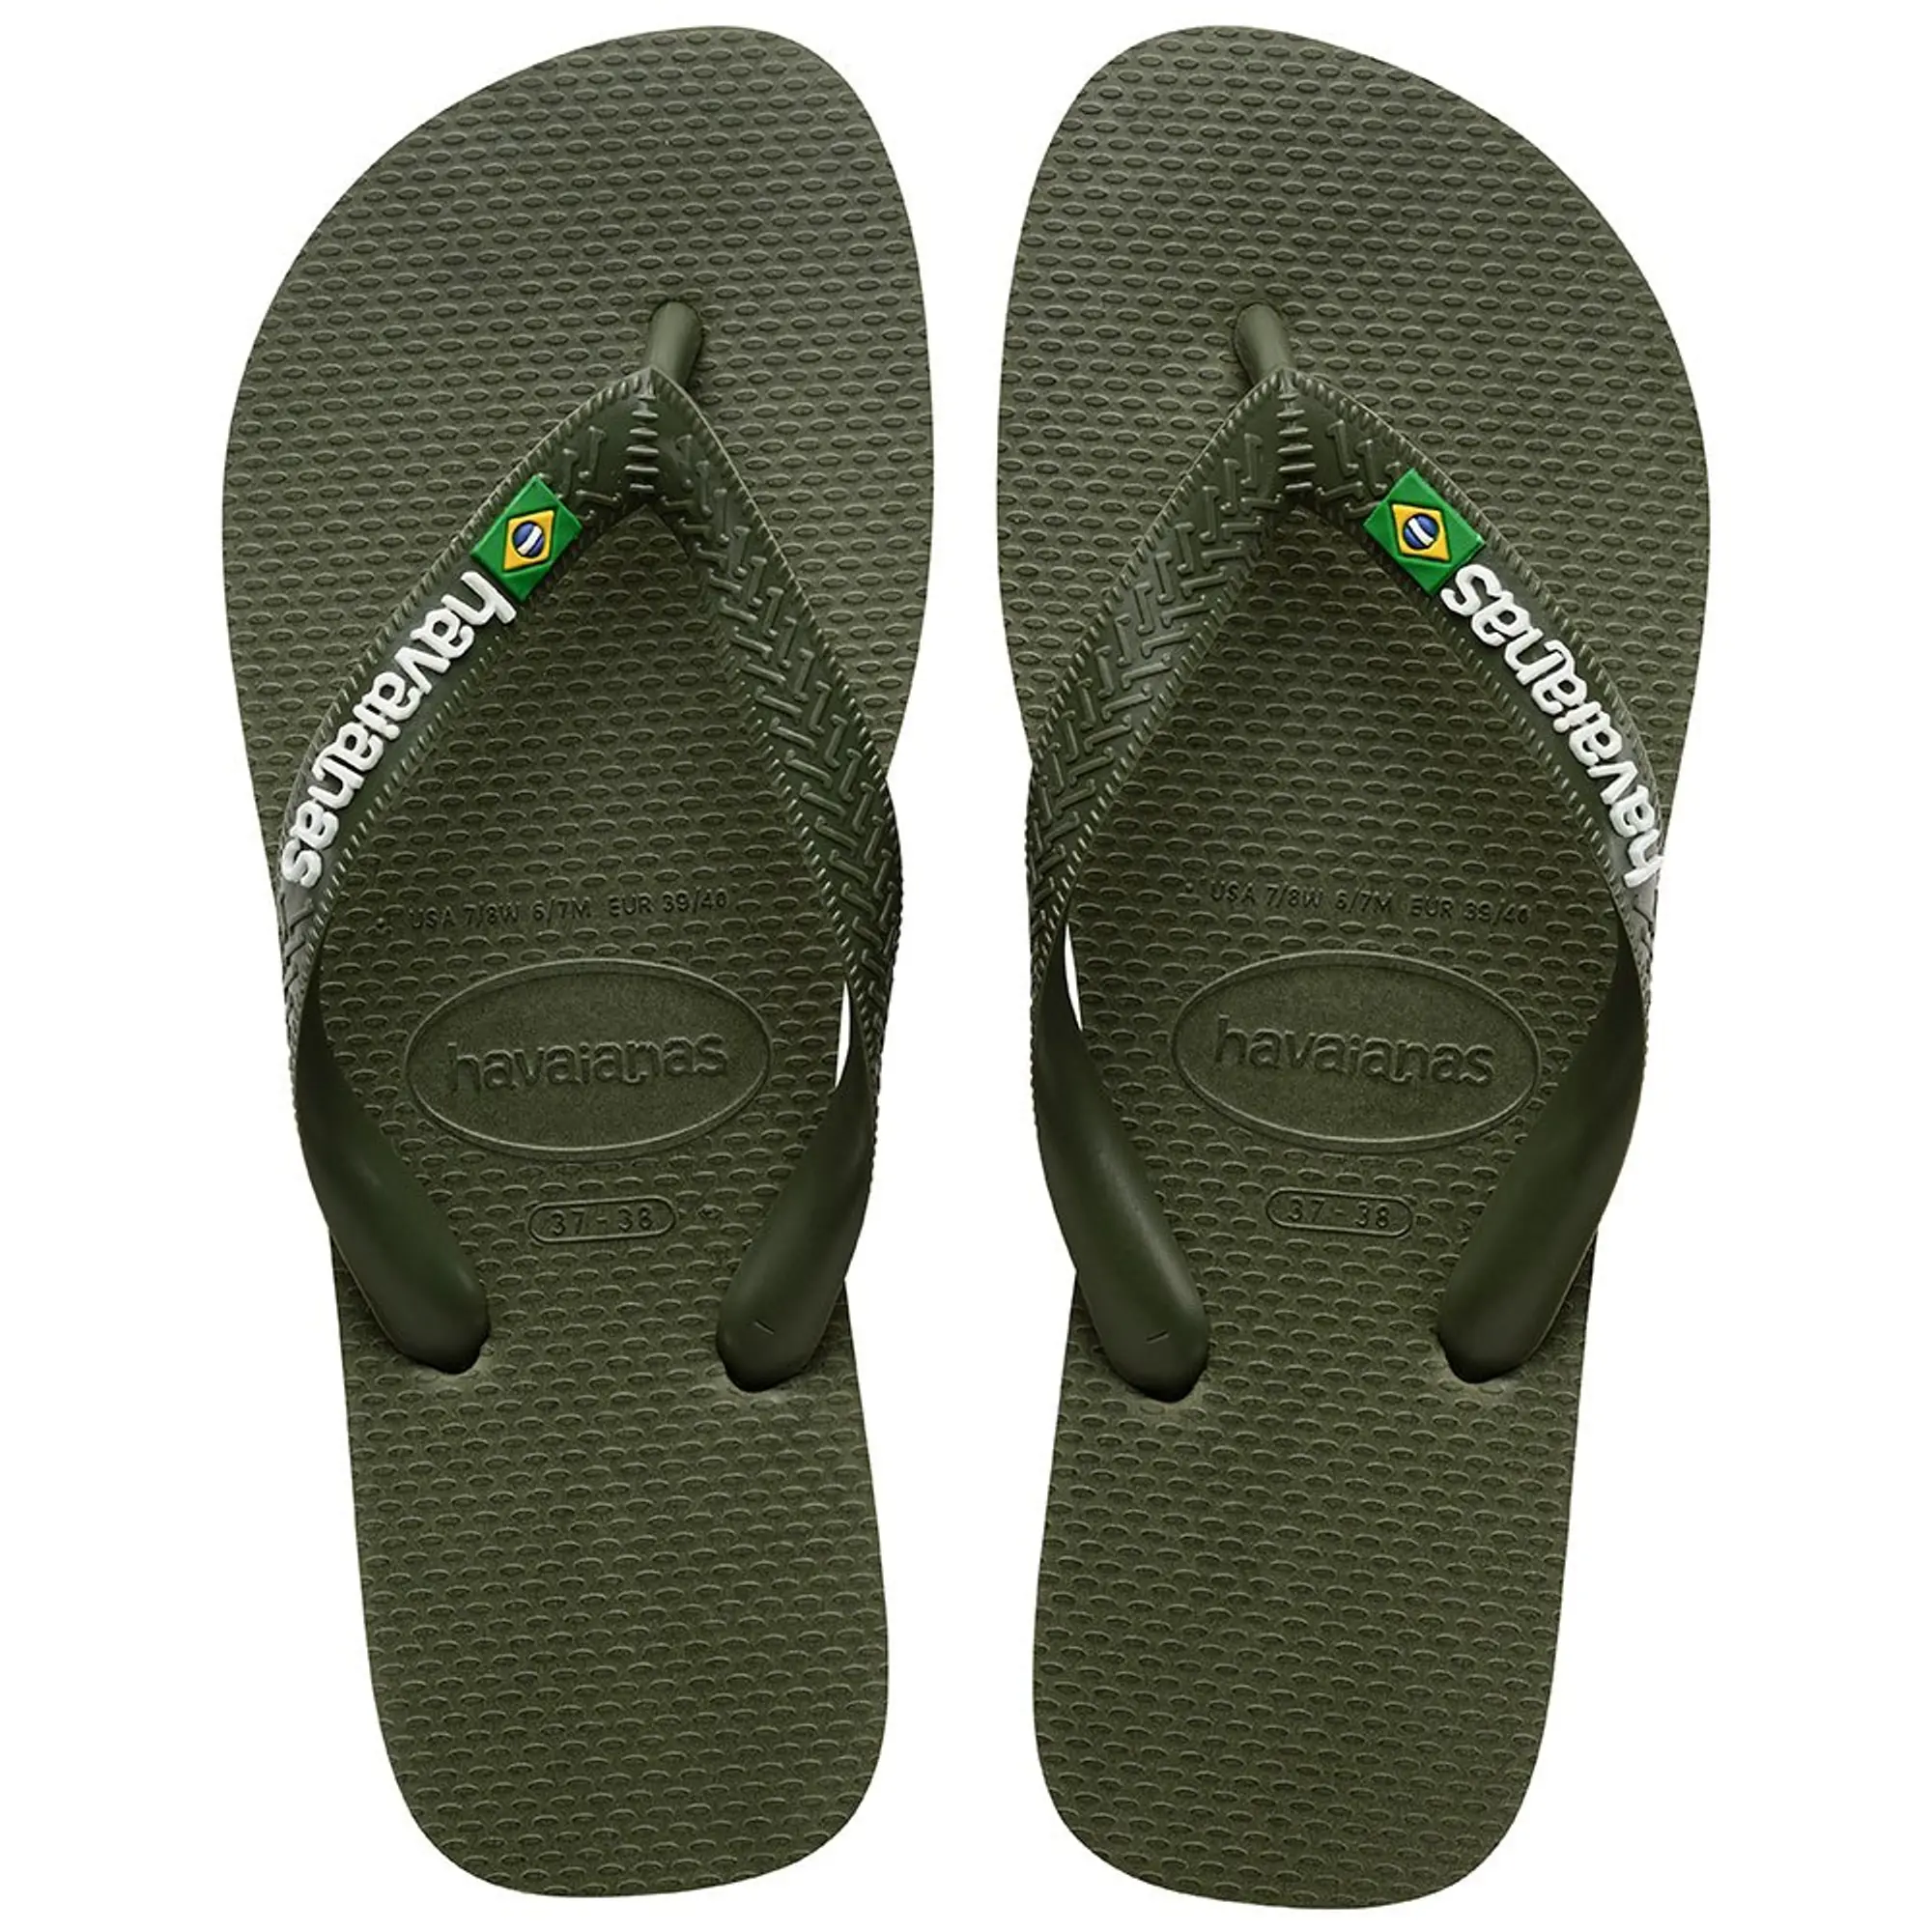 Havaianas Brazil Logo Flip Flops - Green - Mens